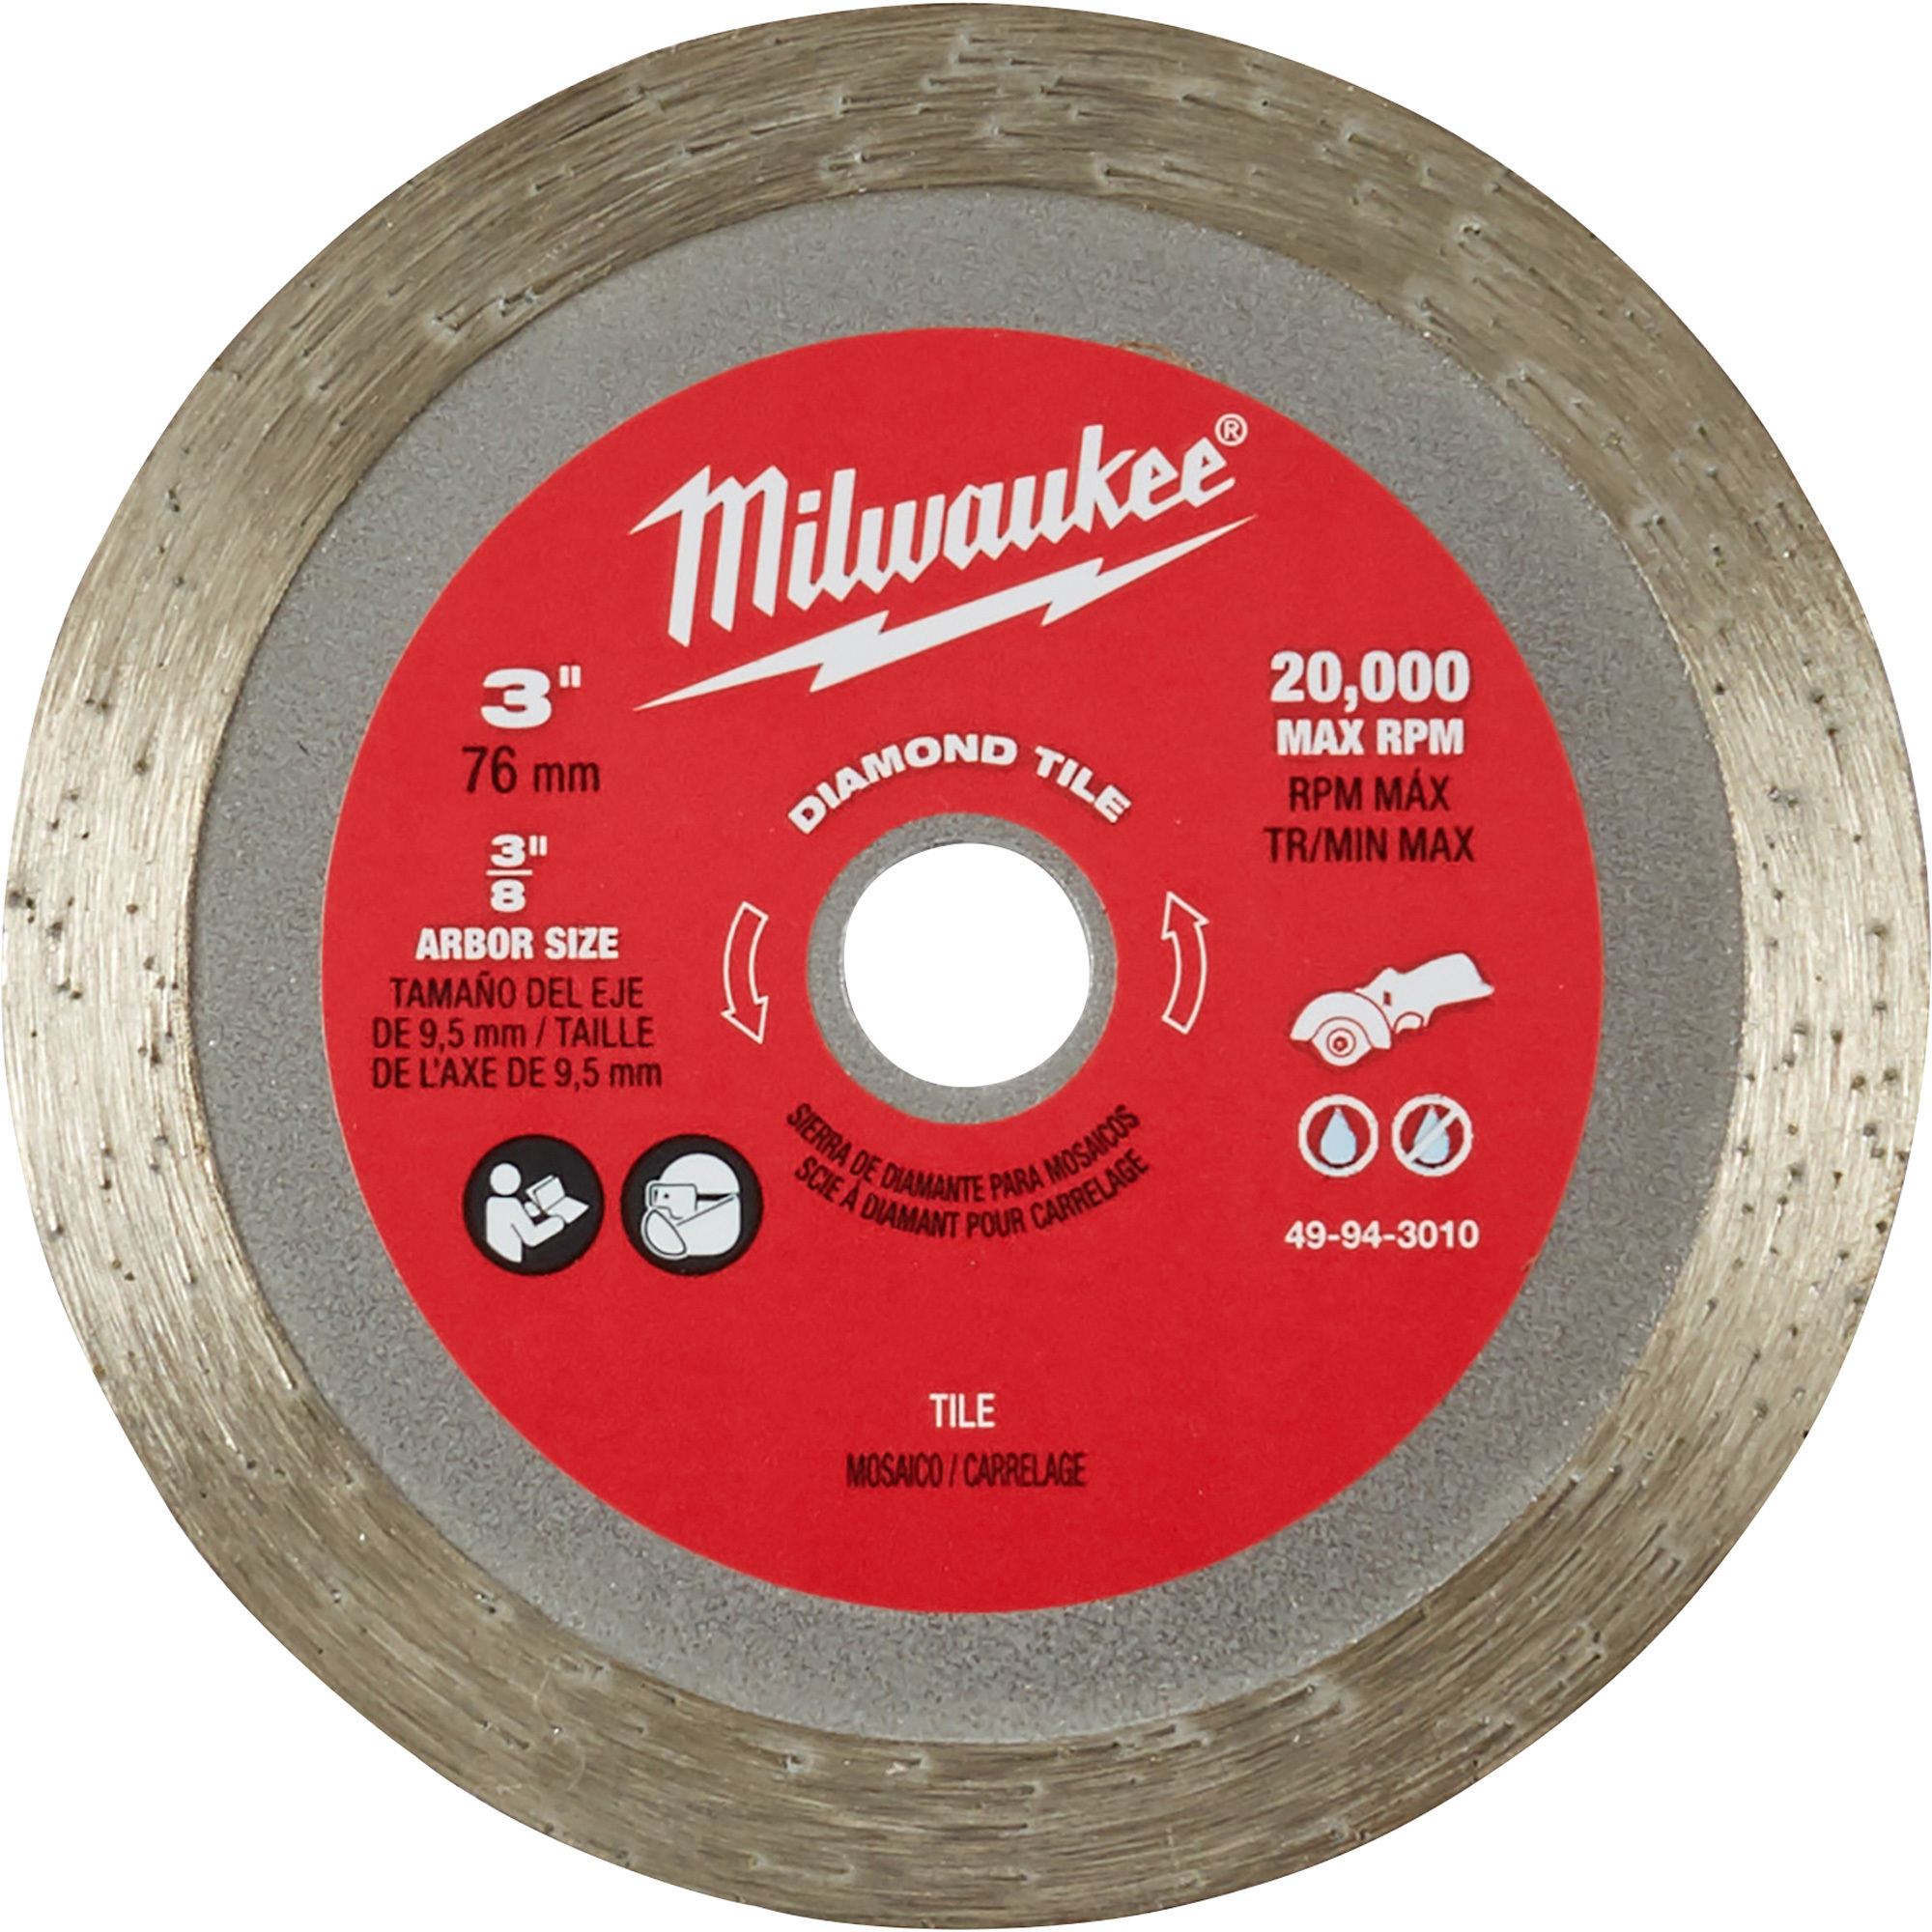 Milwaukee 3Inch Diamond Tile Blade, Model 49-94-3010